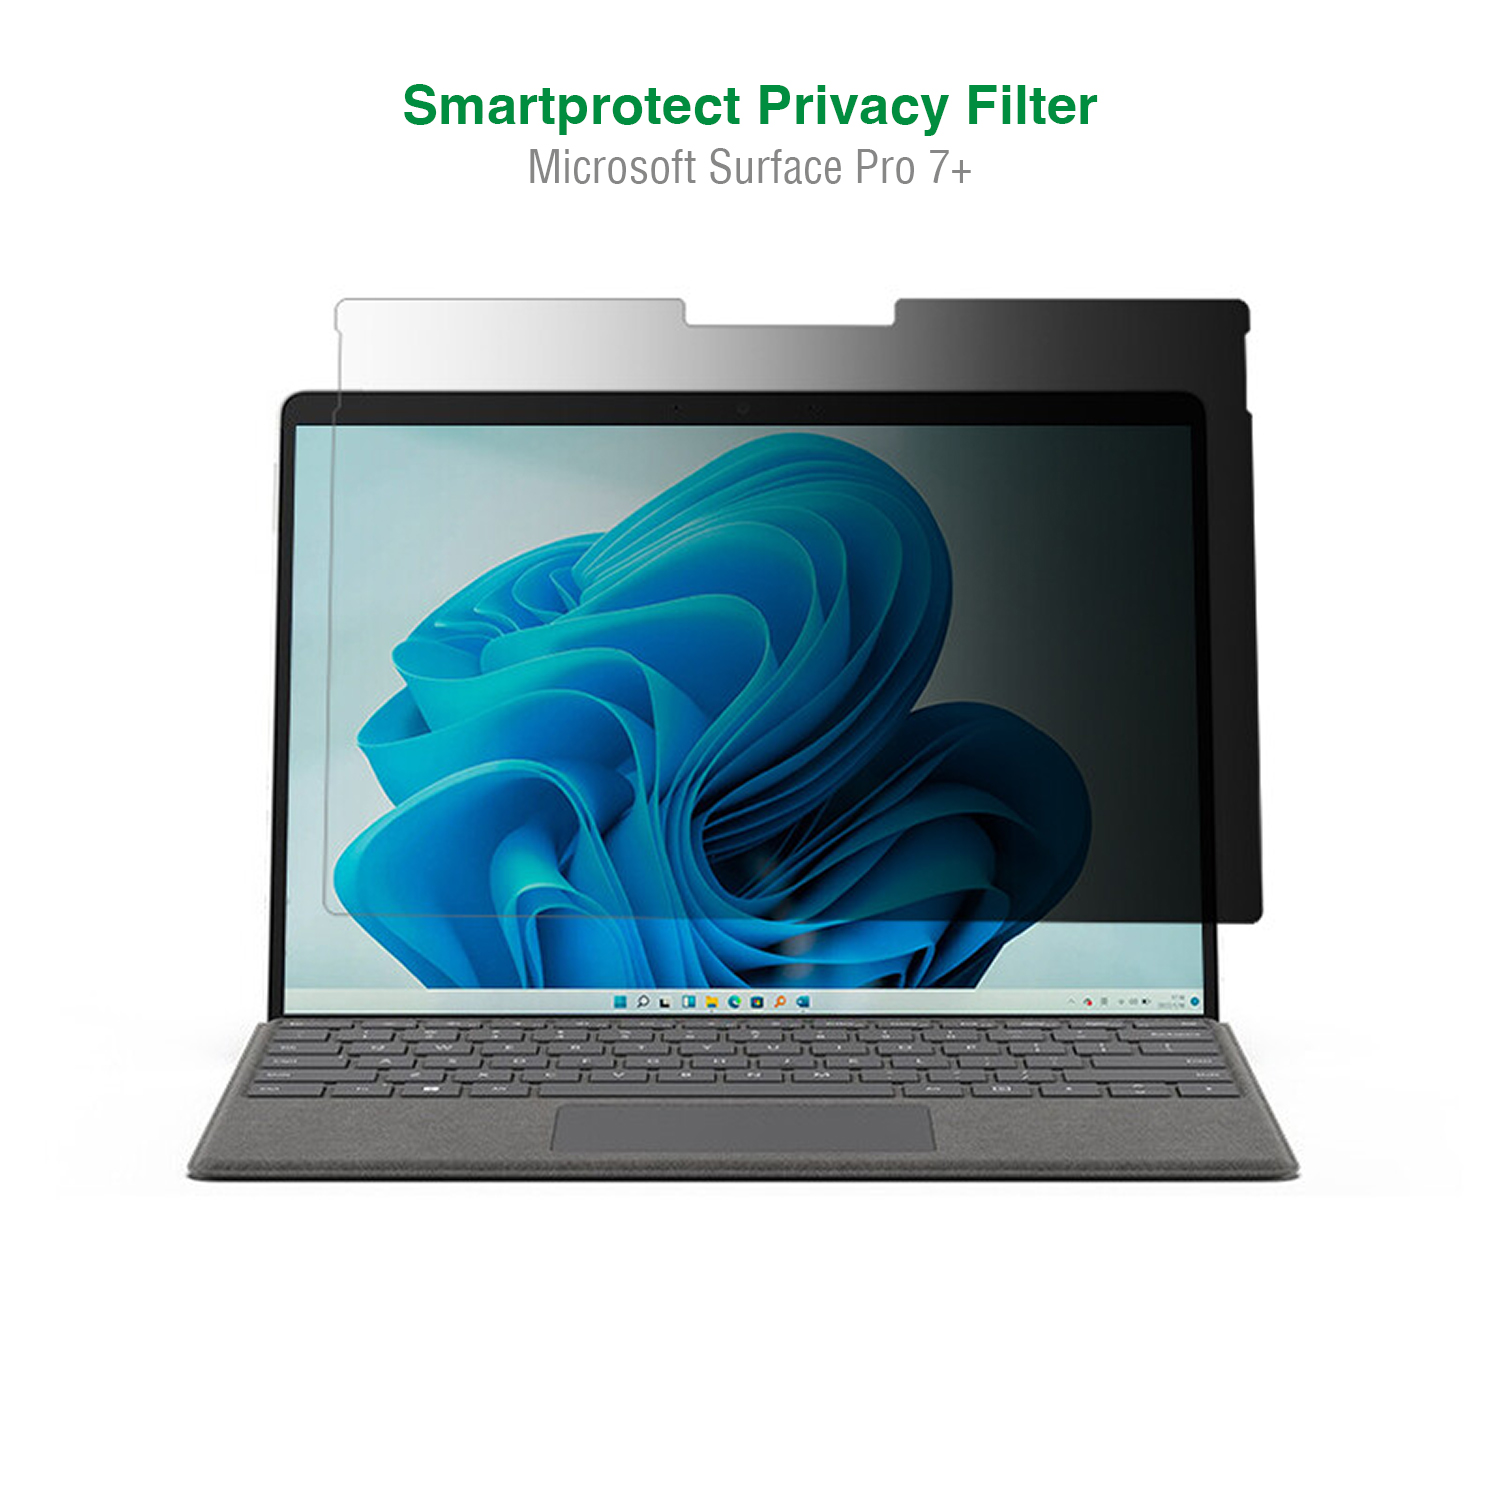 Displayschutzfolie(für 4SMARTS Privacy Filter Microsoft 7+) Surface Pro Smartprotect